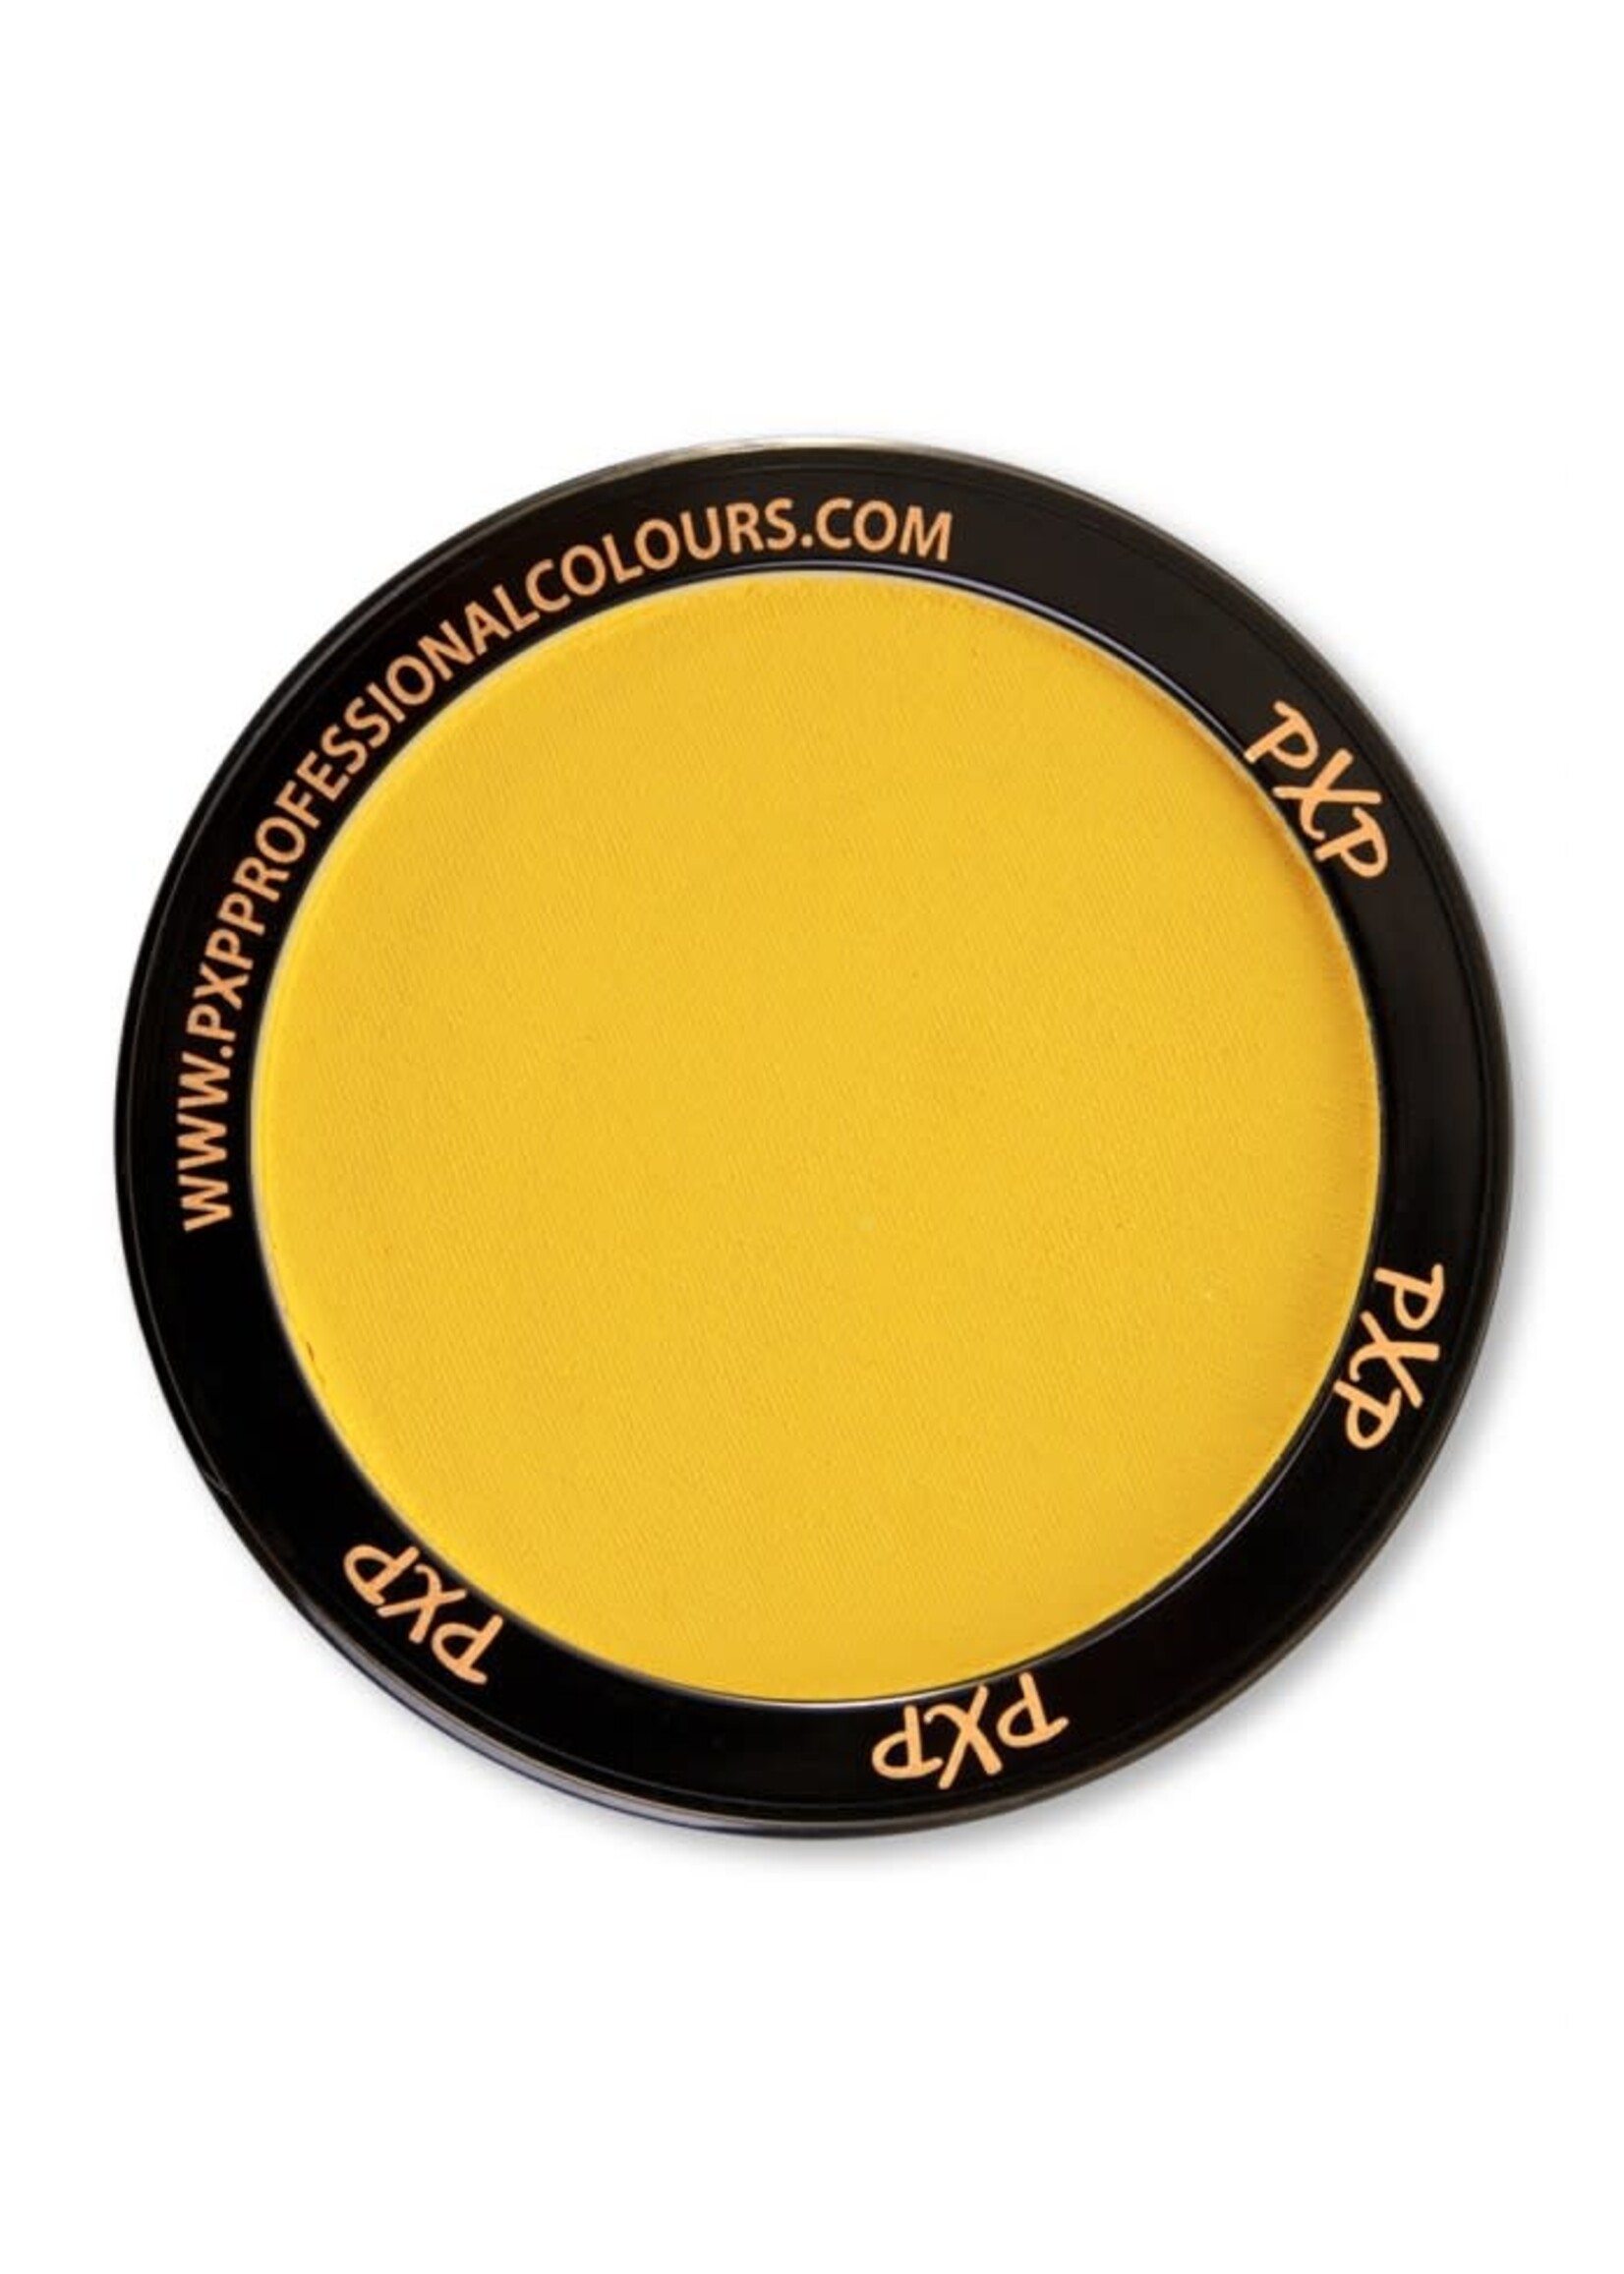 Feestkleding Breda PXP Professional Colours 10 gram Yellow